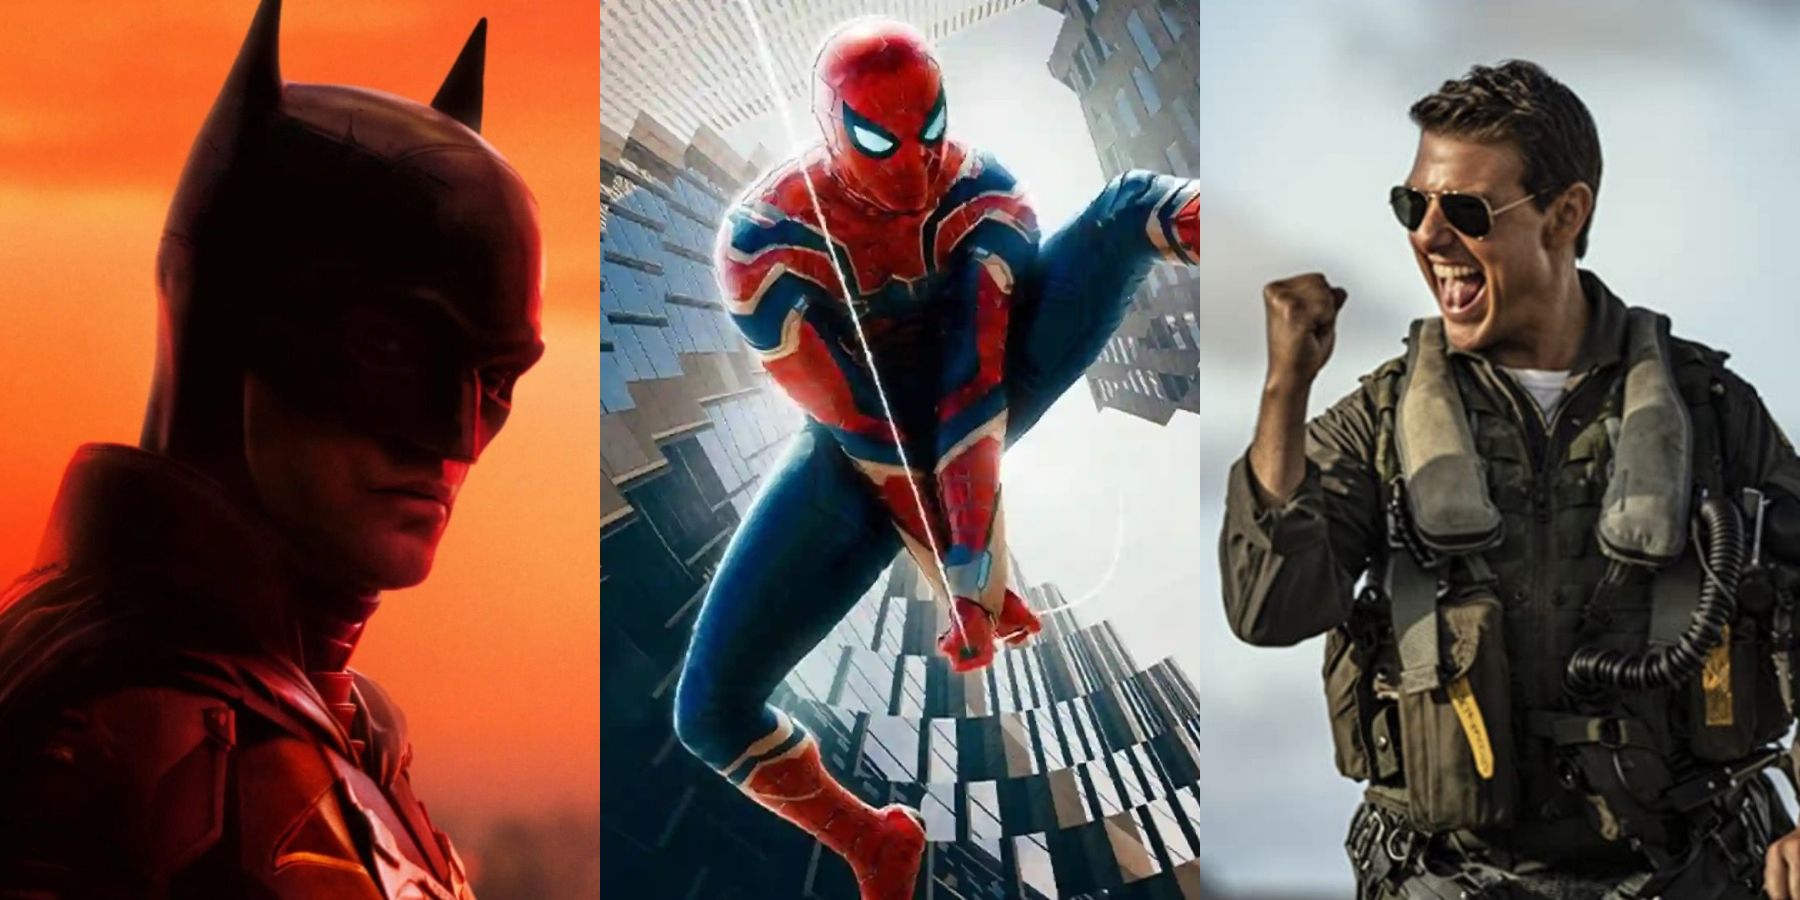 The Batman Spider-Man: No Way Home and Top Gun: Maverick split image